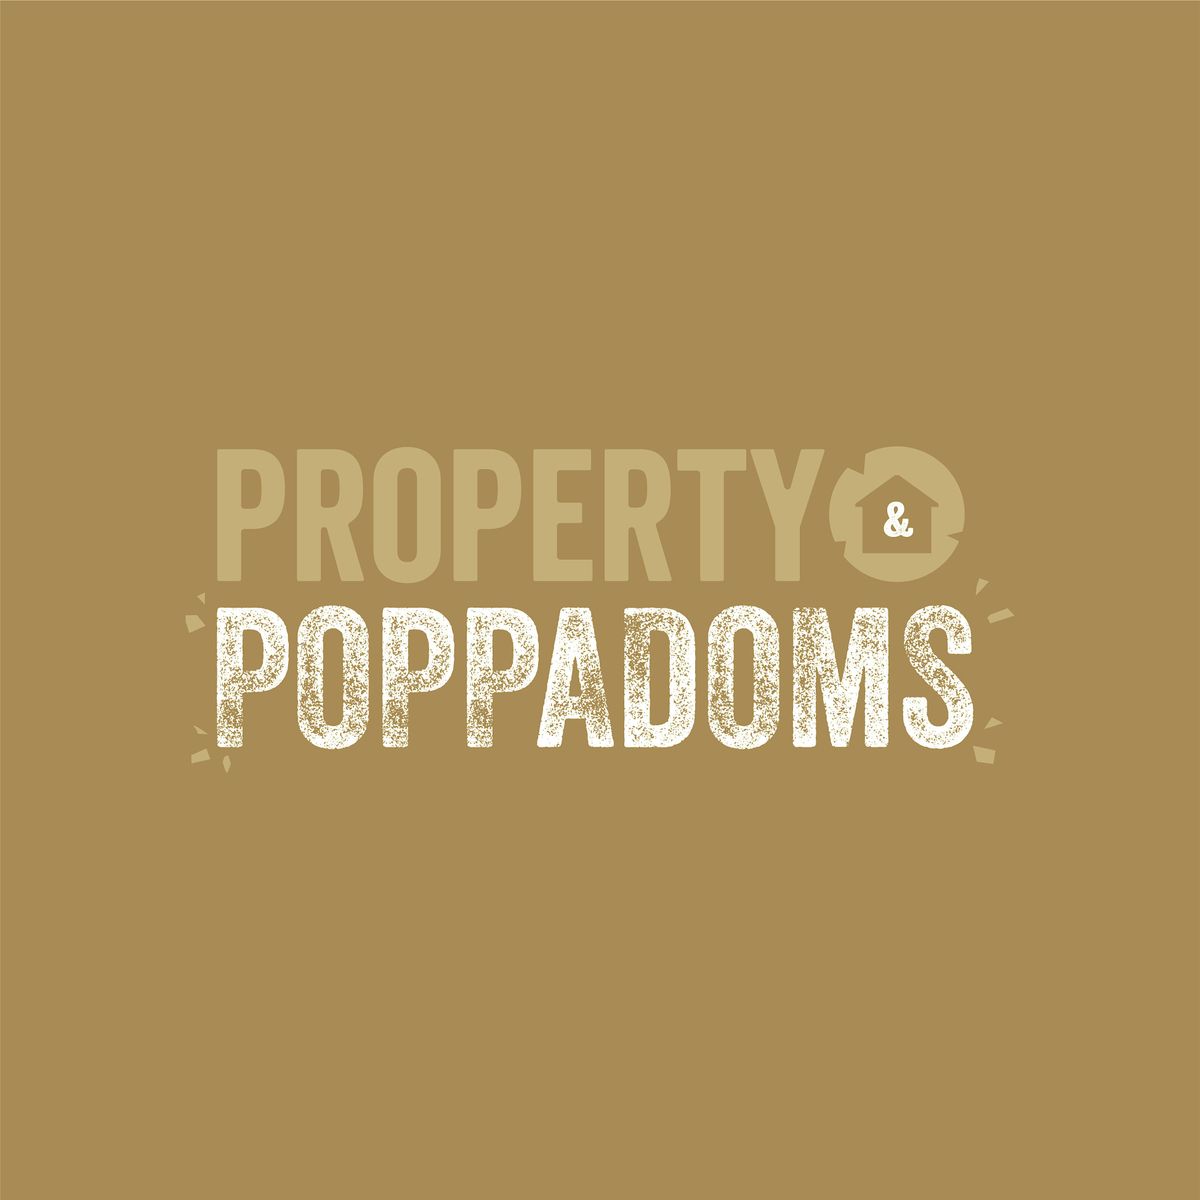 Property & Poppadoms - Leicester